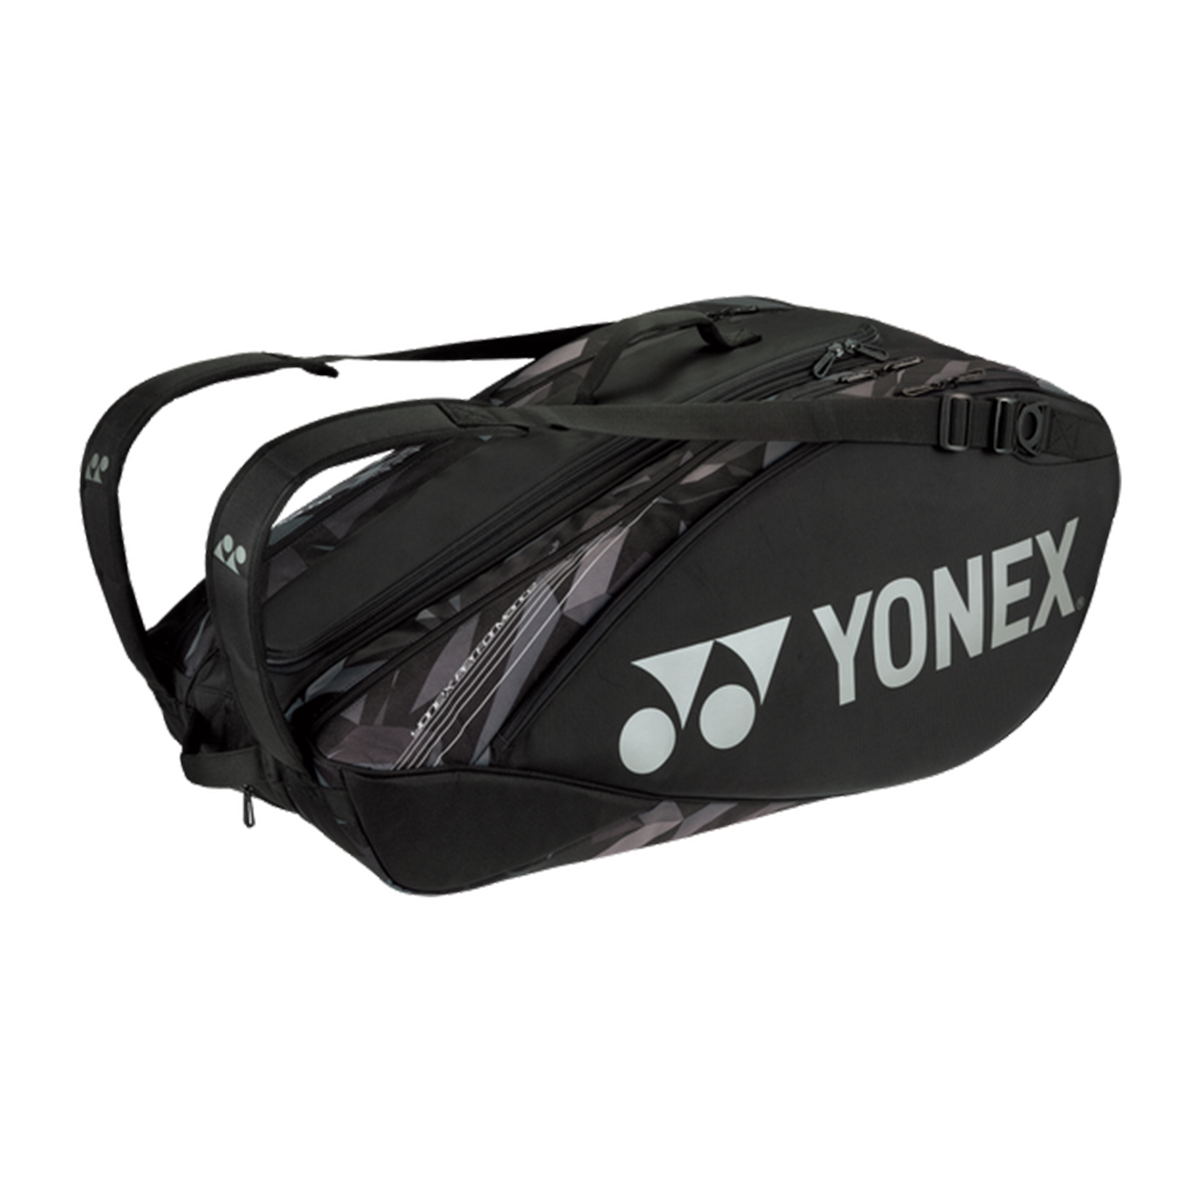 Yonex Pro Racket Bag 9 pcs - Black